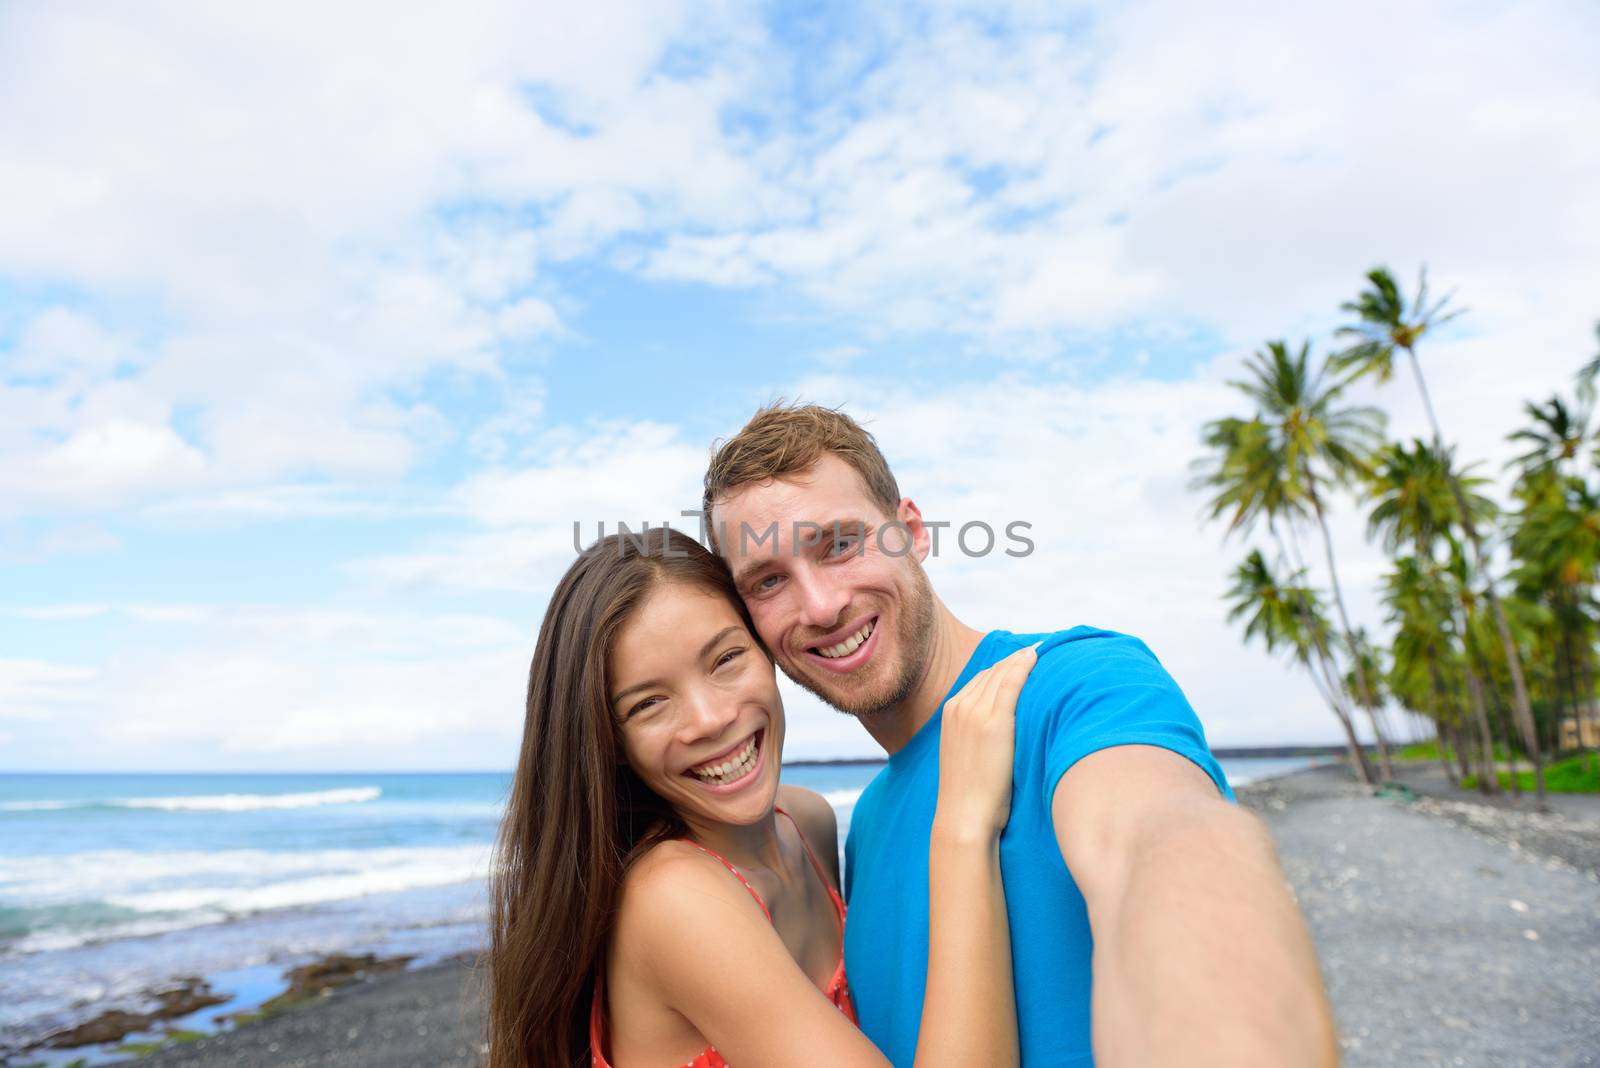 Selfie couple on Hawaii beach holiday taking pictures with smartphone on summer vacations in Big island, Hawaii. Travel destination. People having fun vlogging on social media on hawaiian holidays by Maridav